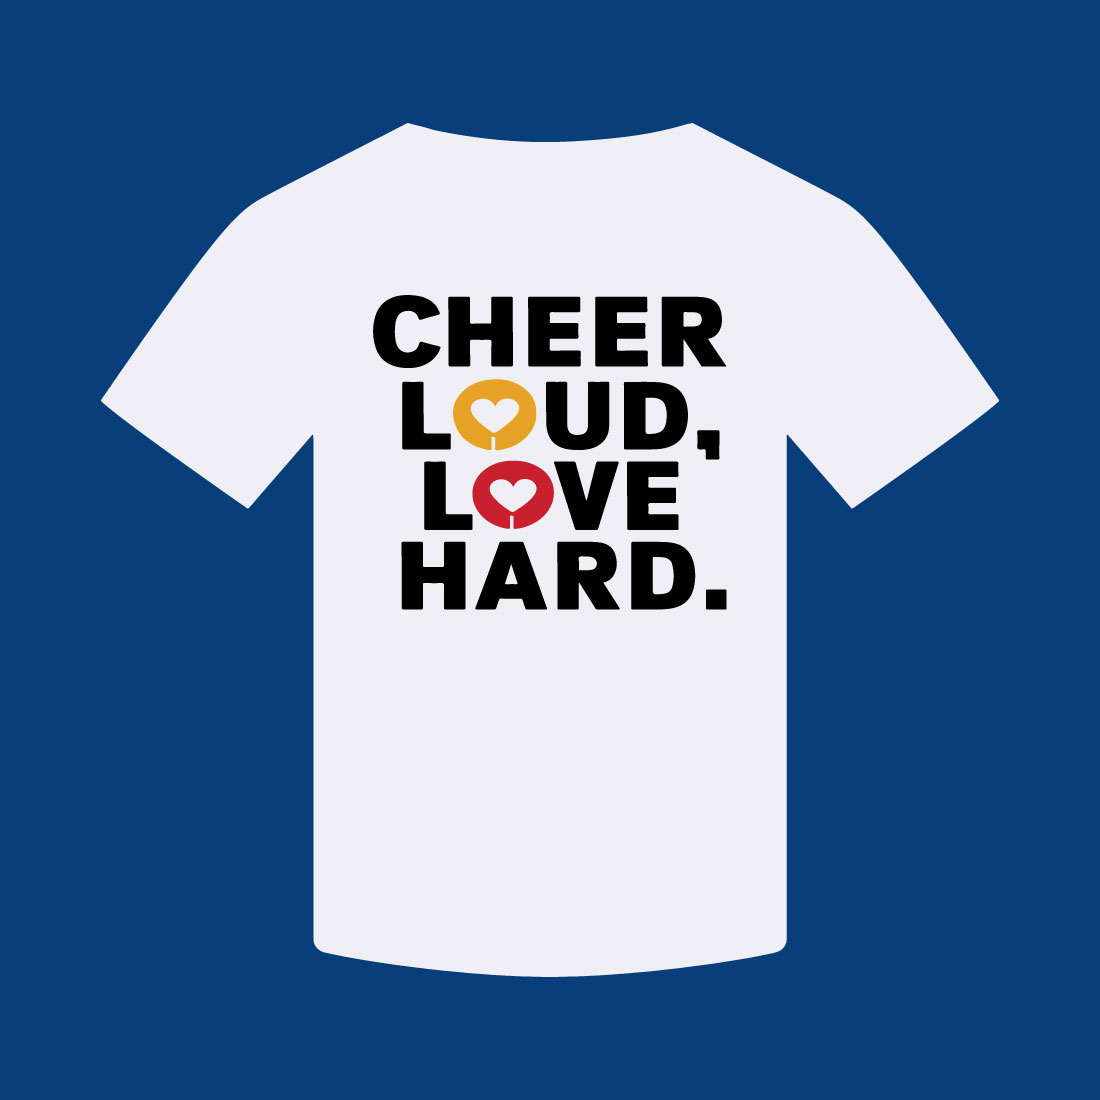 baseball typography vector t shirt design cheer loud love hard 693